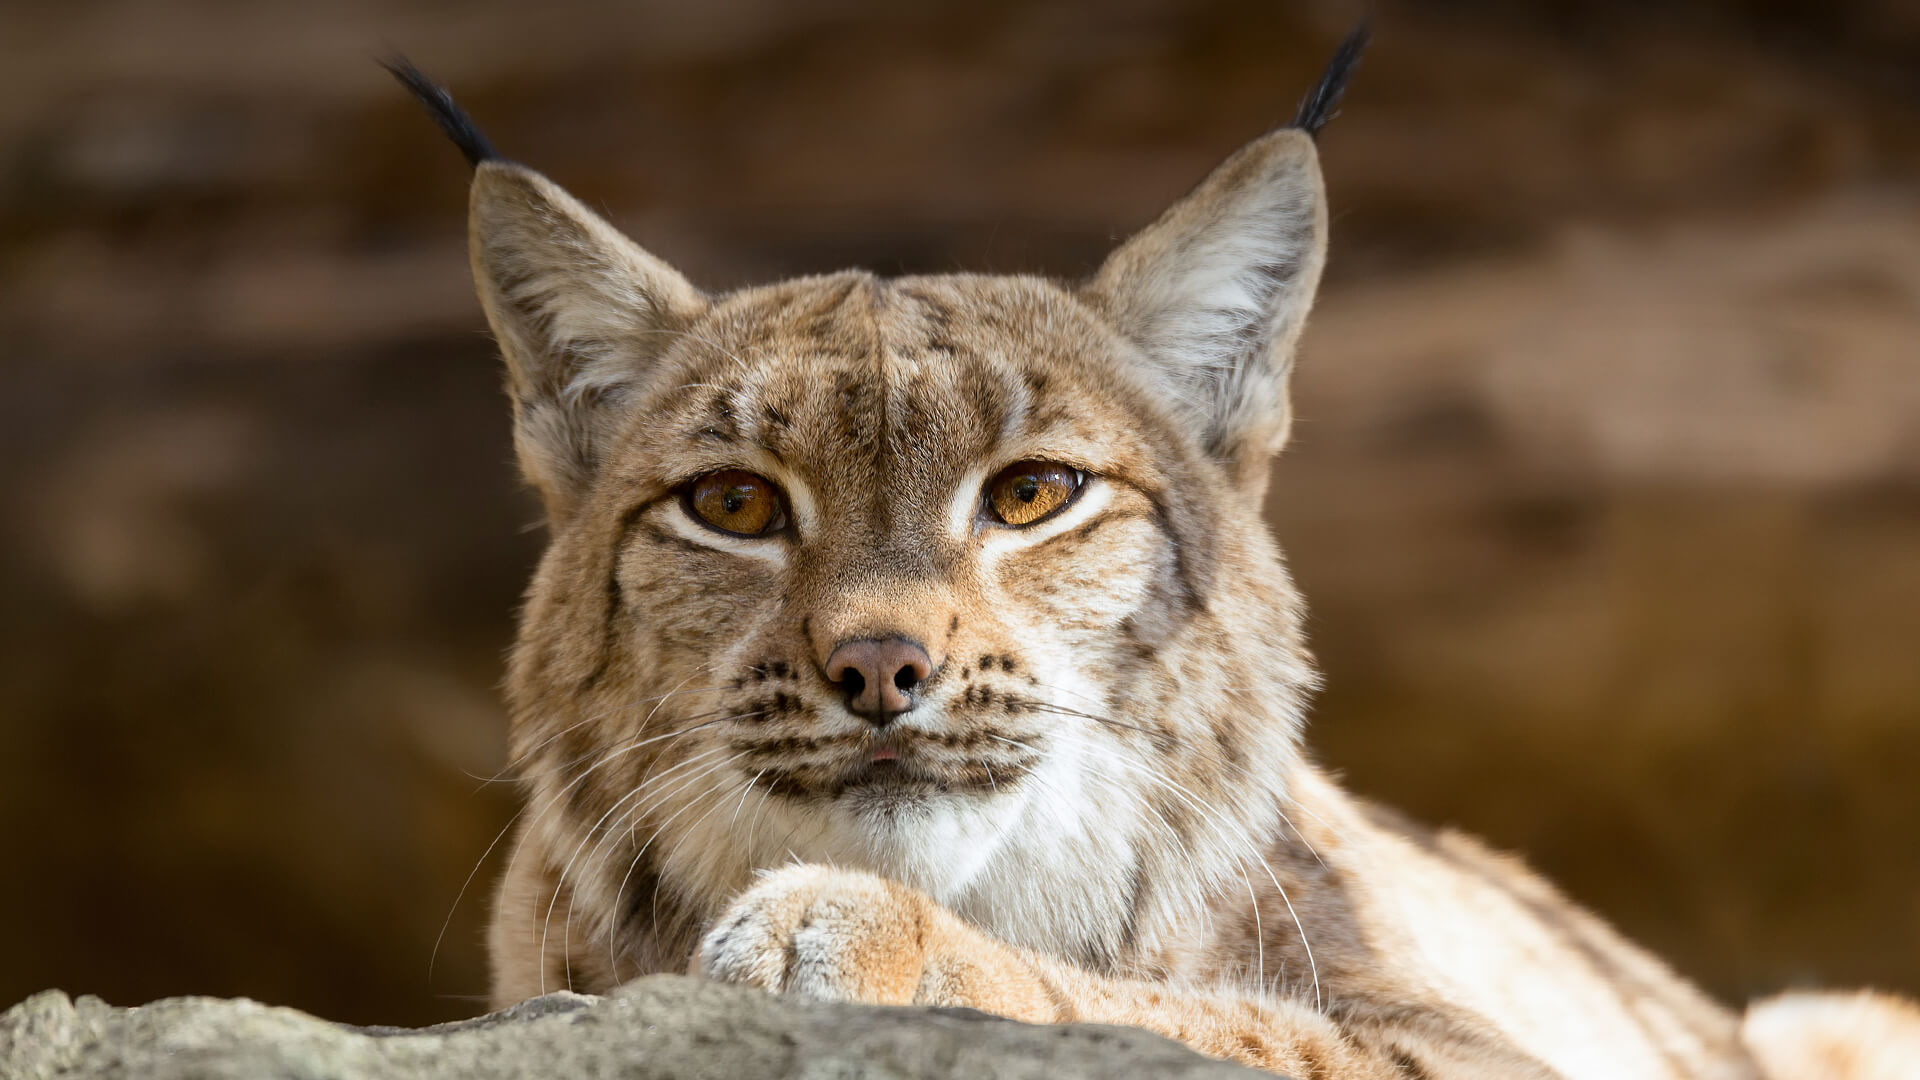 Lynx and Bobcat San Diego Zoo Animals & Plants